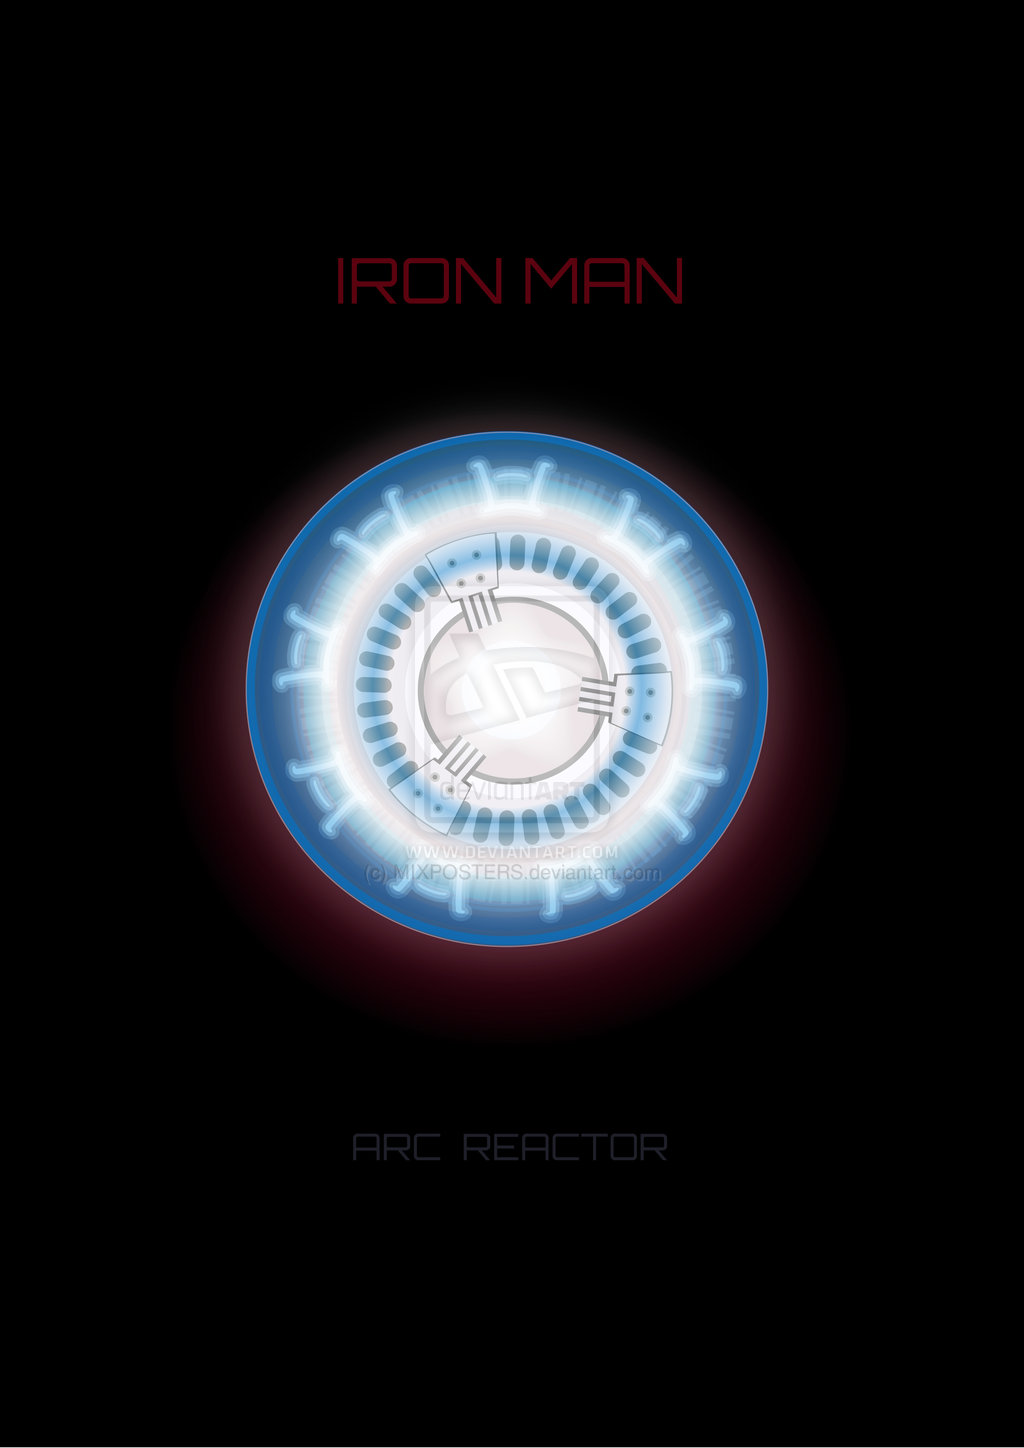 Ironman Arc Reactor Wallpaper HD Iron Man Poster